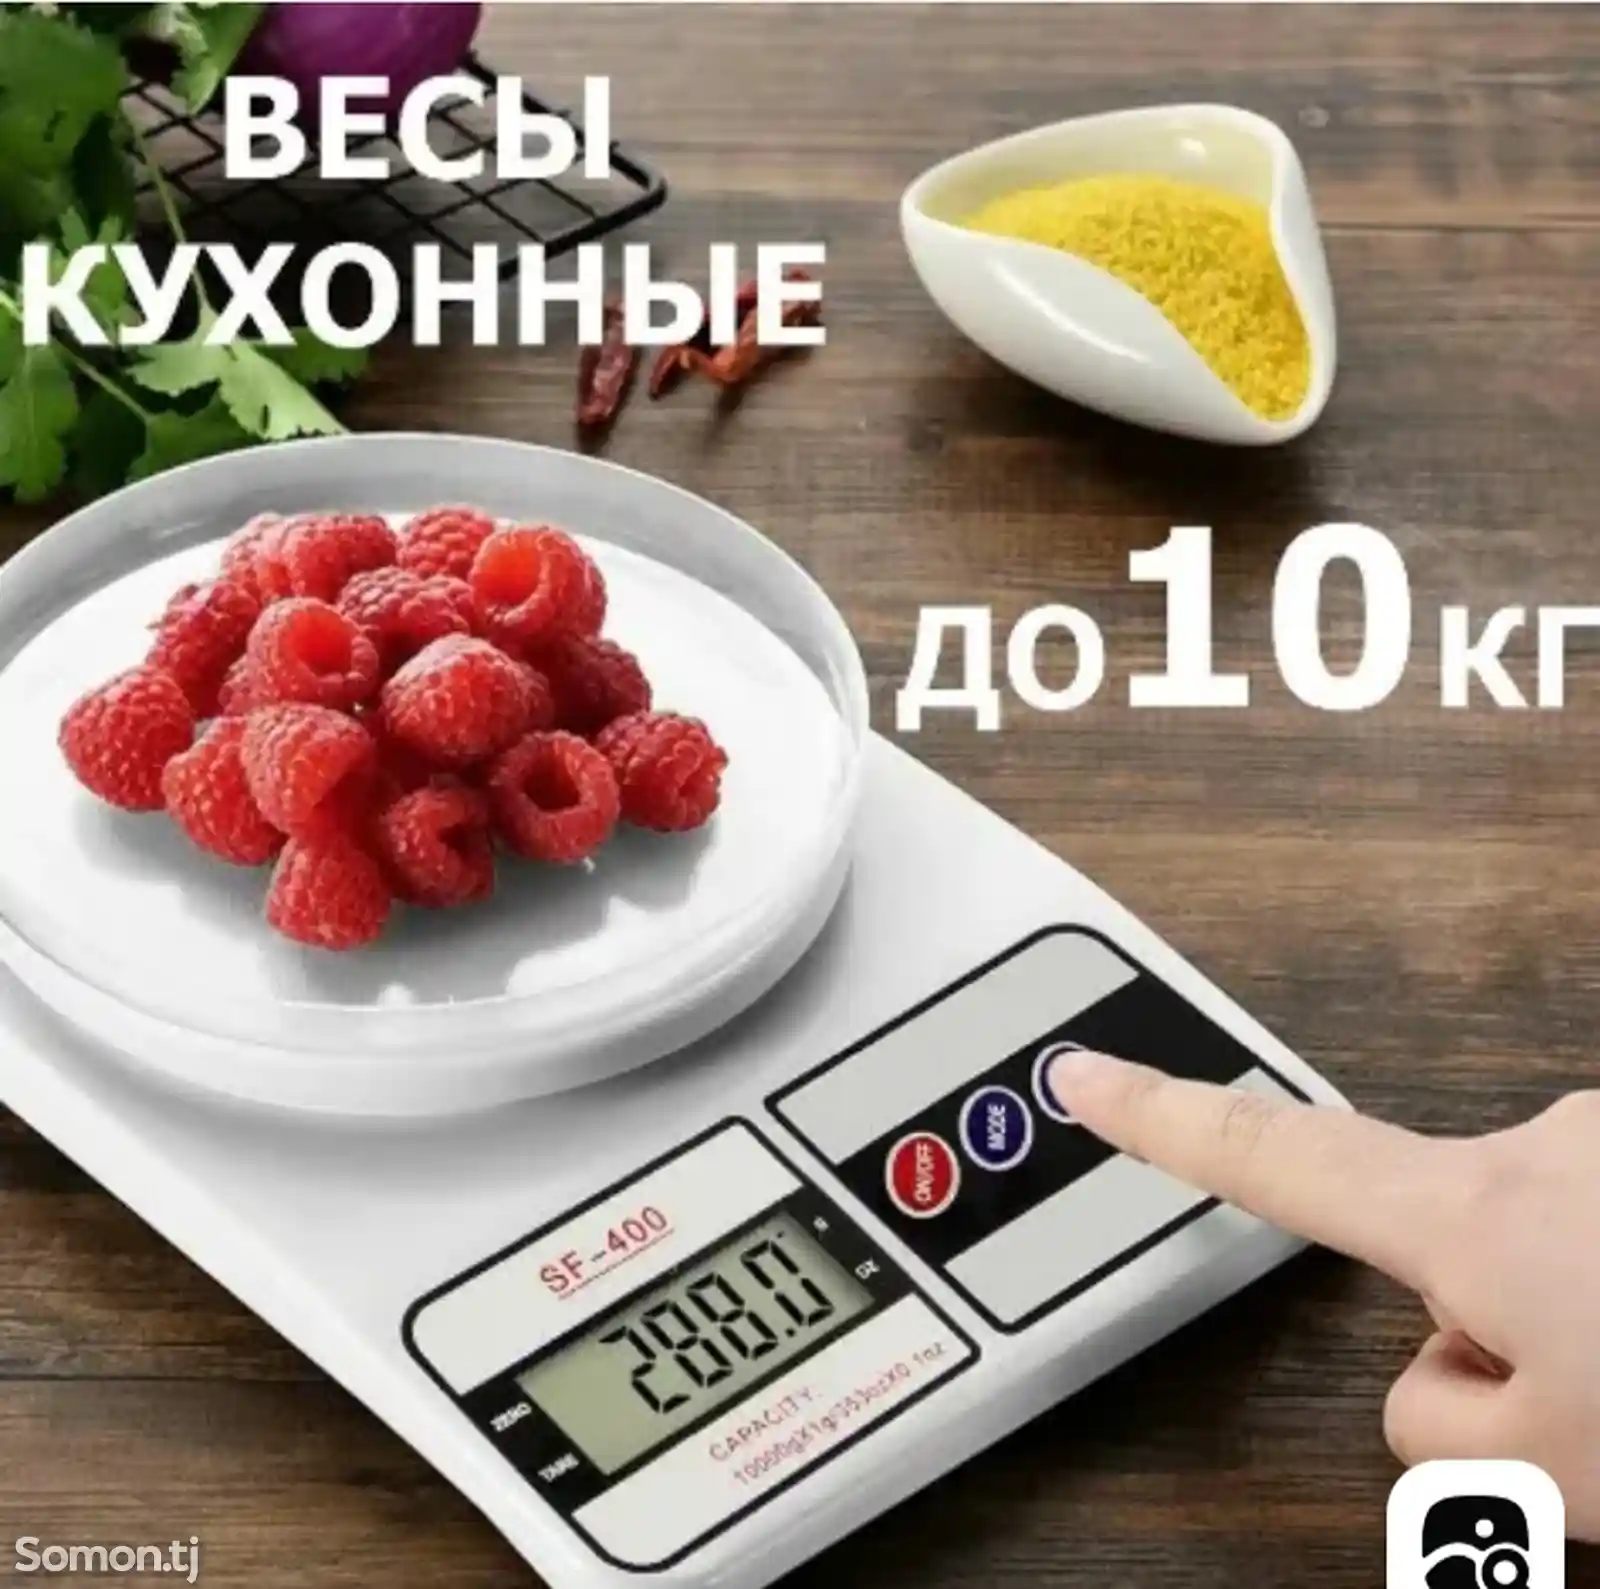 Весы кухонные-1